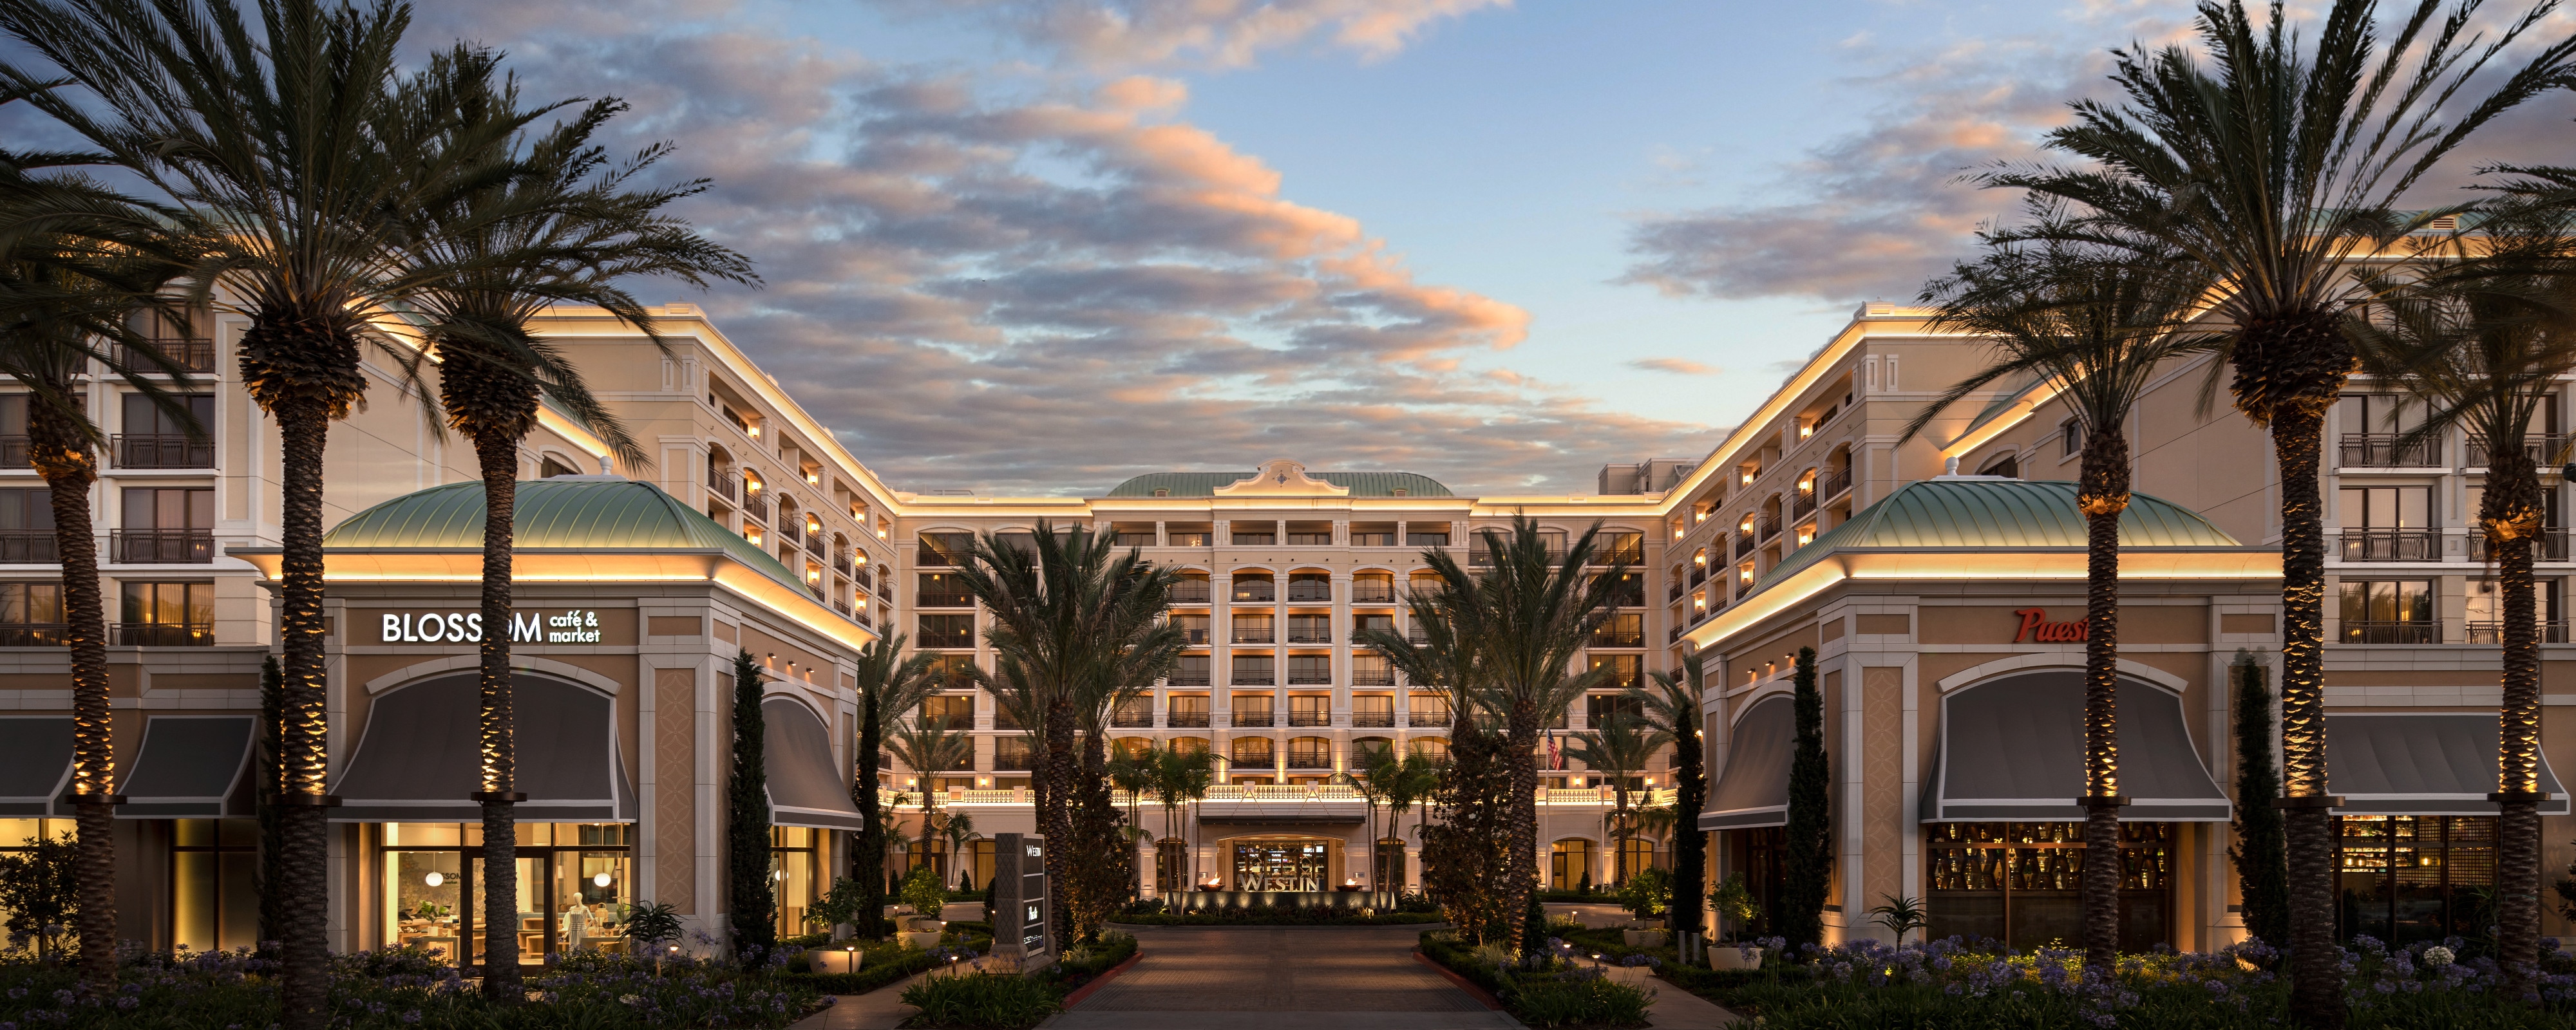 Hotels Anaheim California | The Westin Anaheim Resort